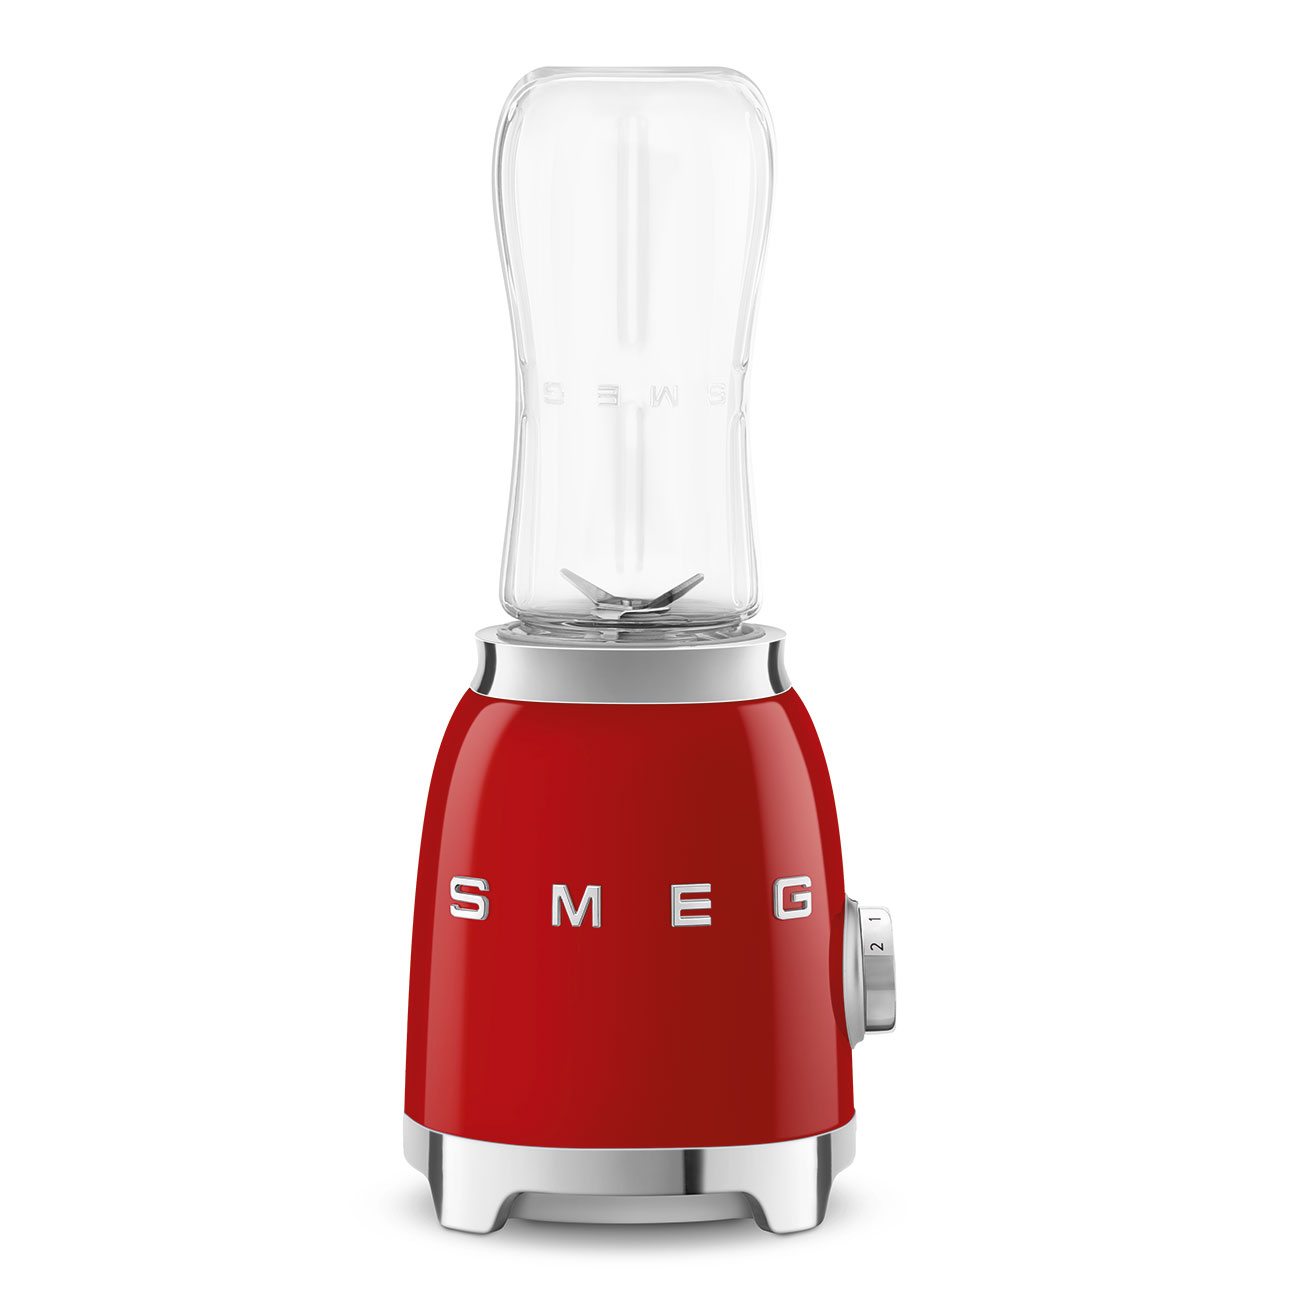 Smeg Personal Blender 300w 2 Speed Red